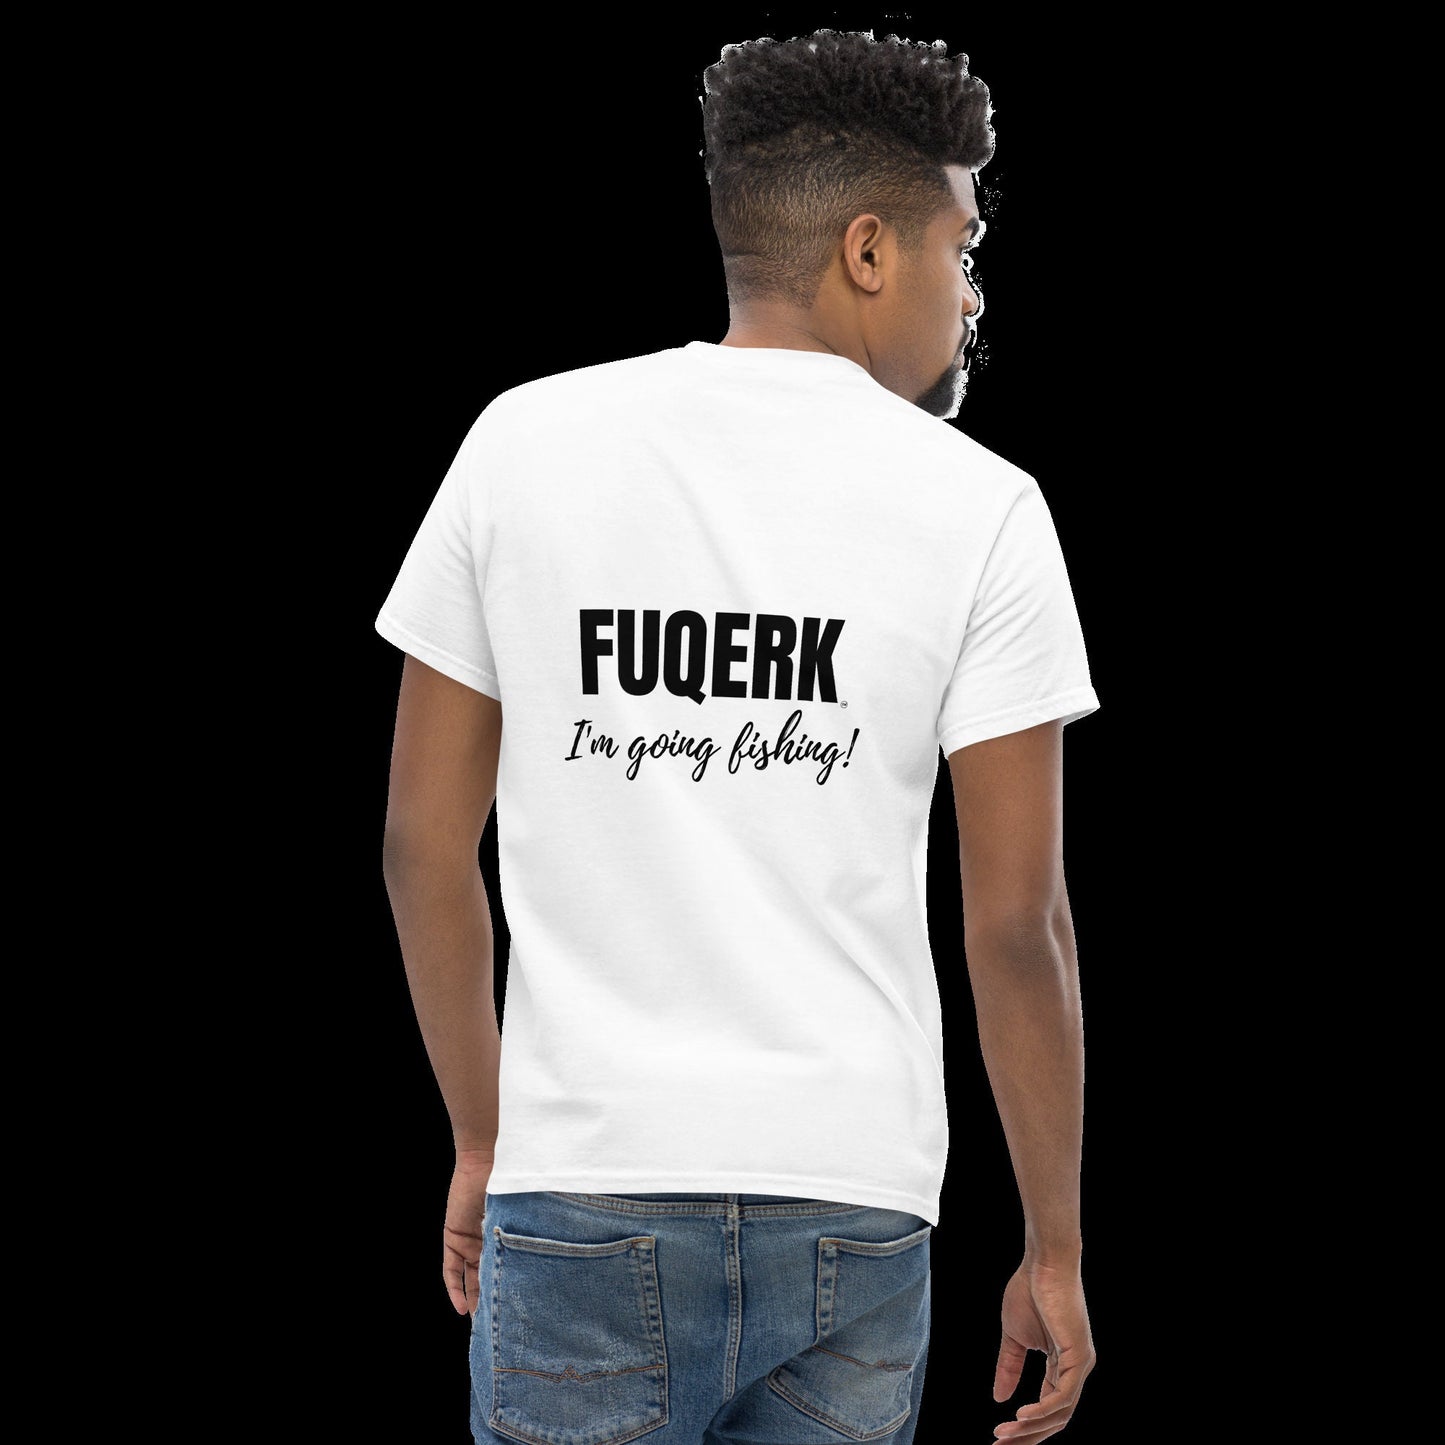 Get Hooked: 'FUCK WORK, I'm going fishing!' Unisex White Tee by FUQERK"